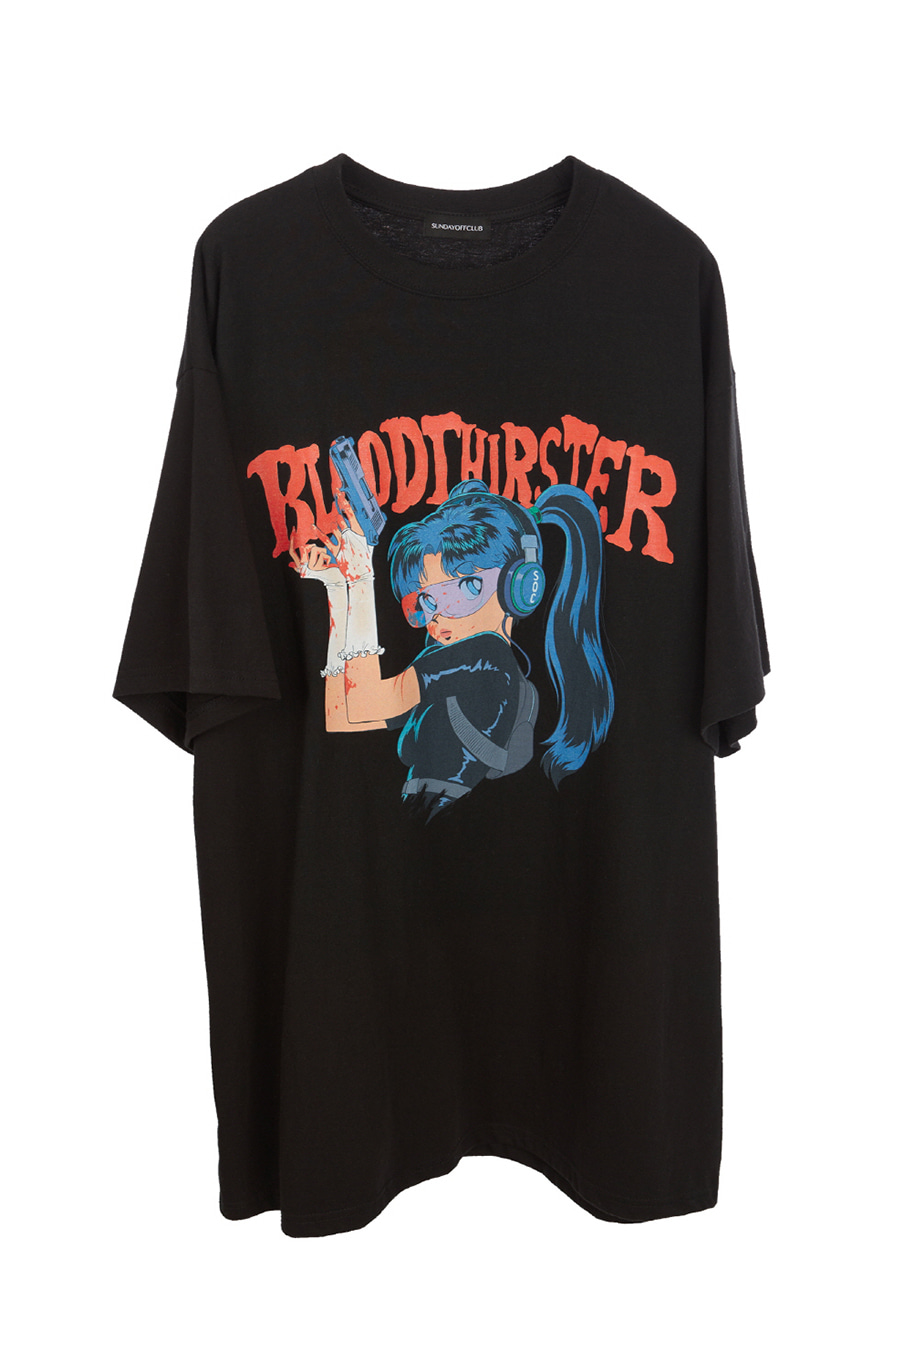 Bloodthirster T-Shirt - Black